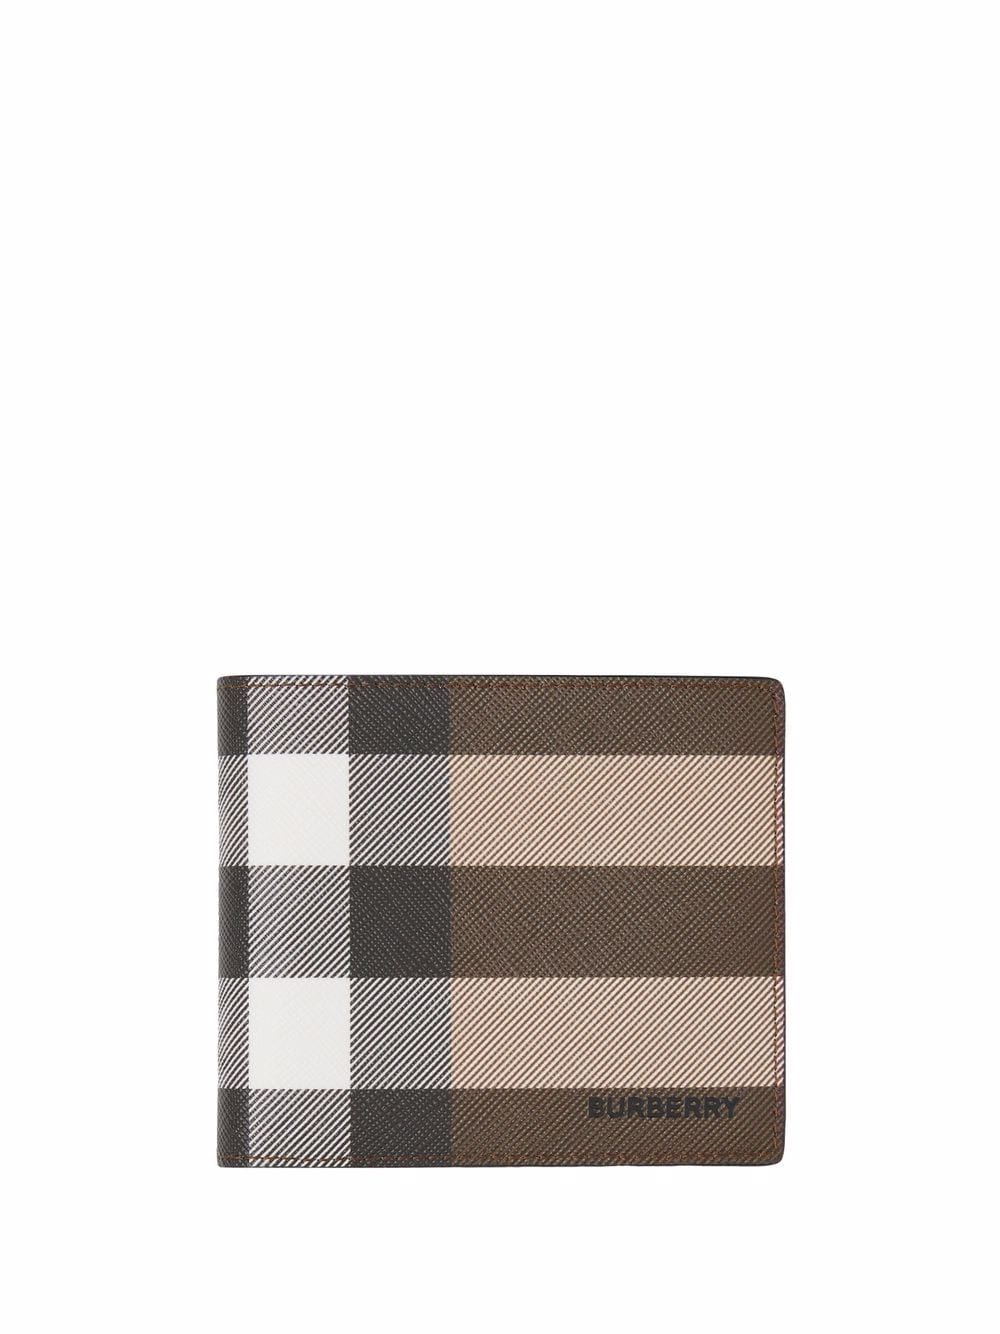 Burberry check logo wallet - Brown von Burberry